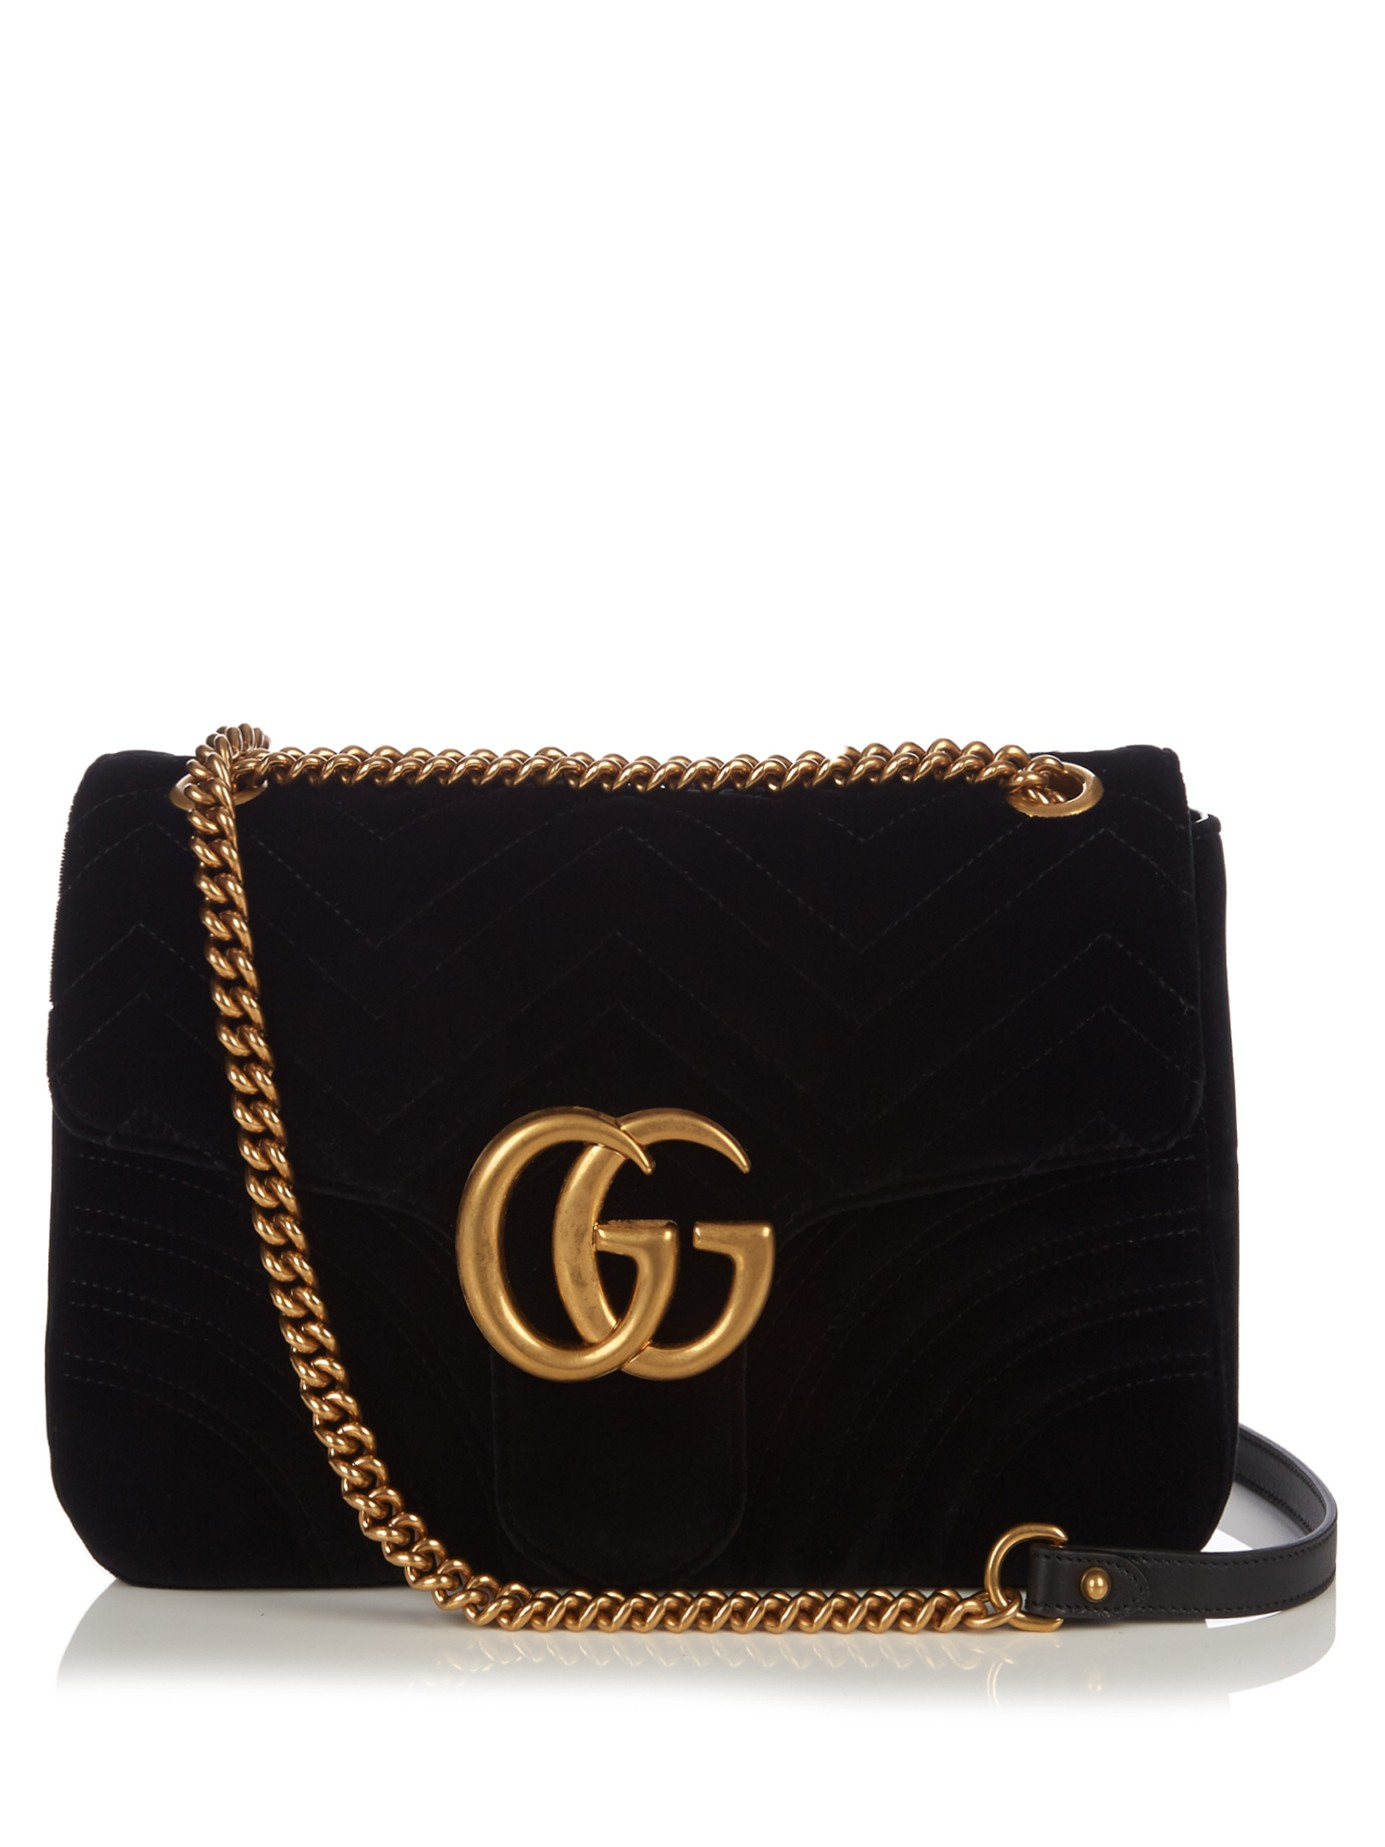 Lyst - Gucci Gg Marmont Chevron-velvet Shoulder Bag in Black